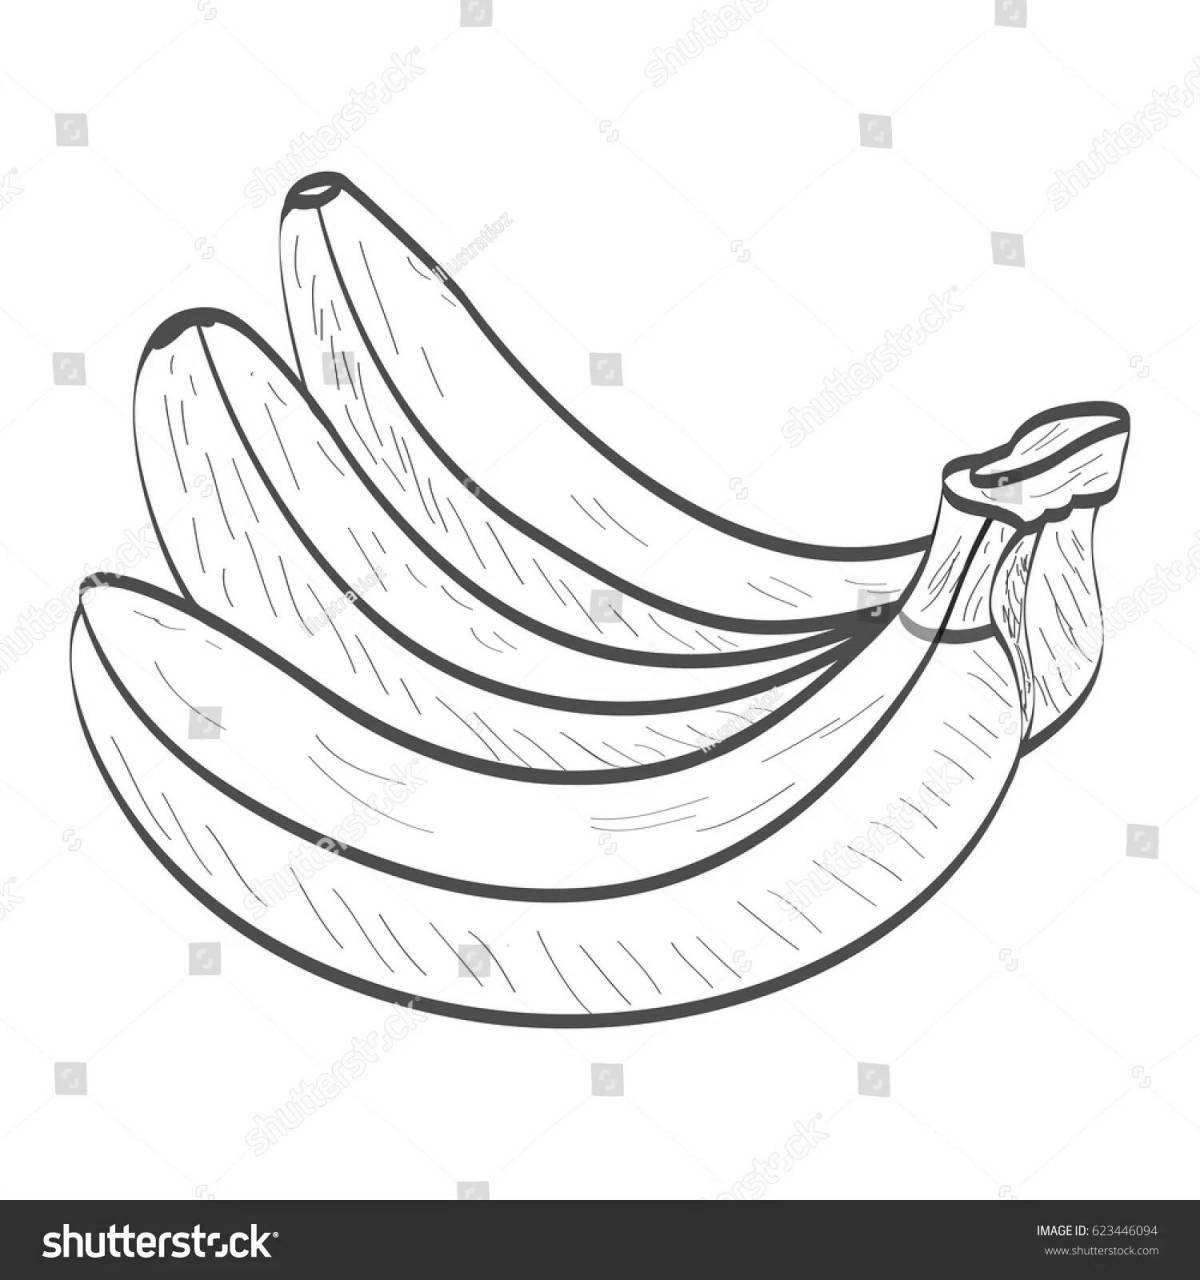 Banana for children 2 3 years old #2